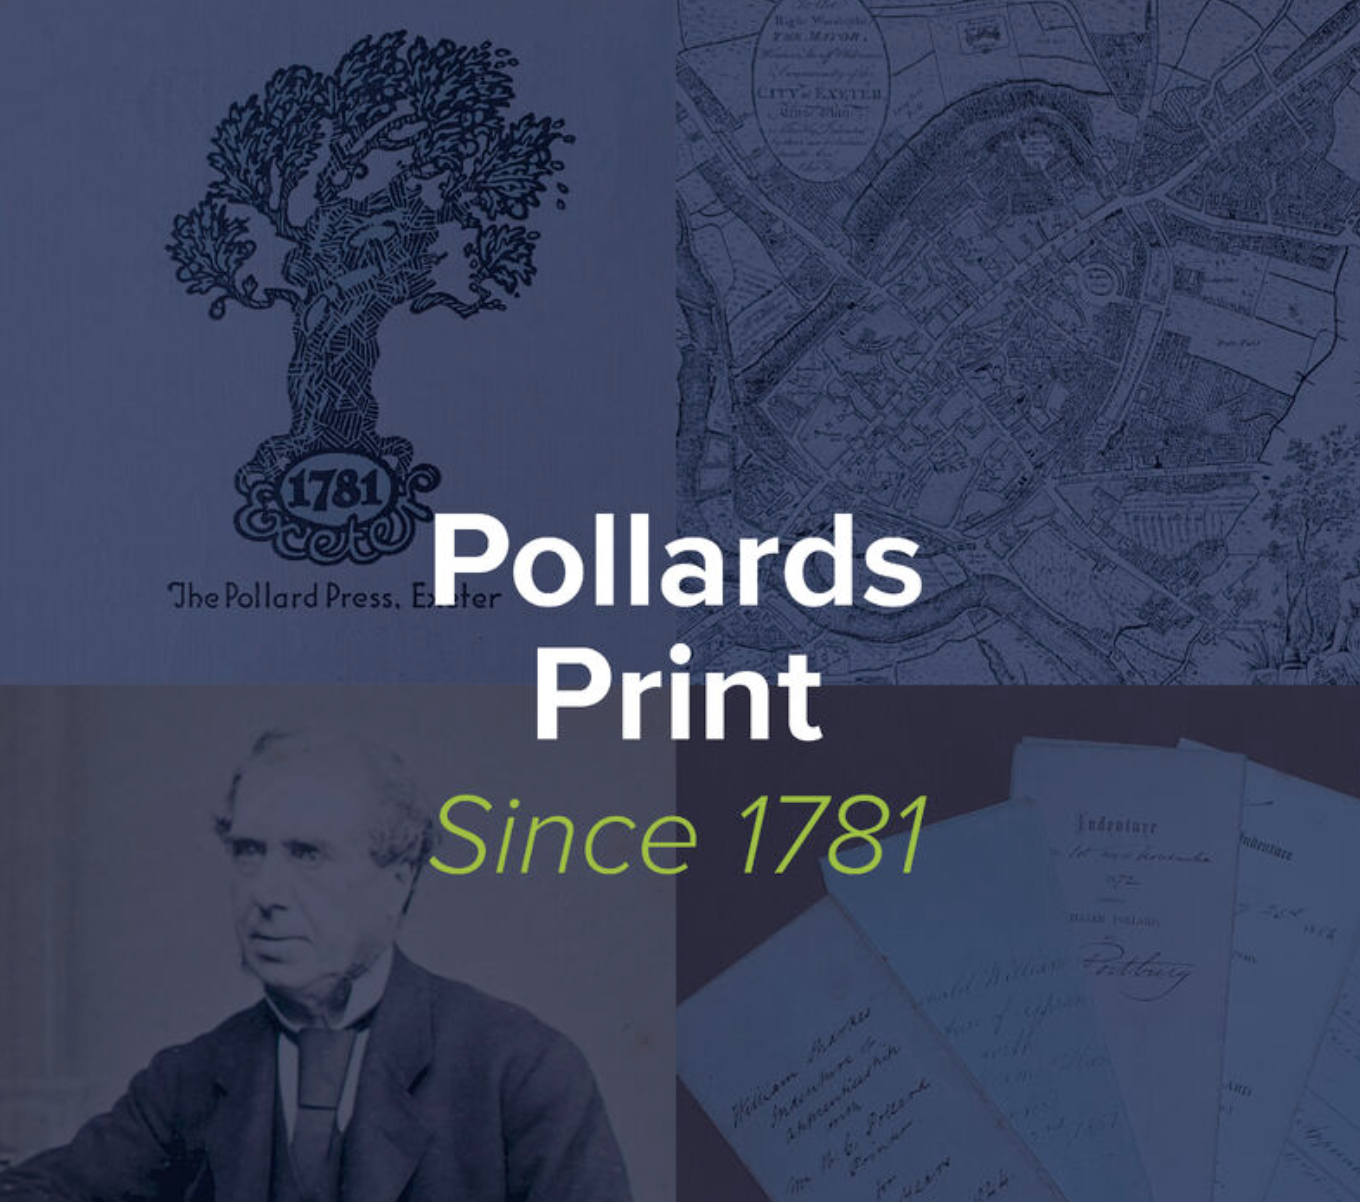 pollards-print-william-pollard-and-company.png